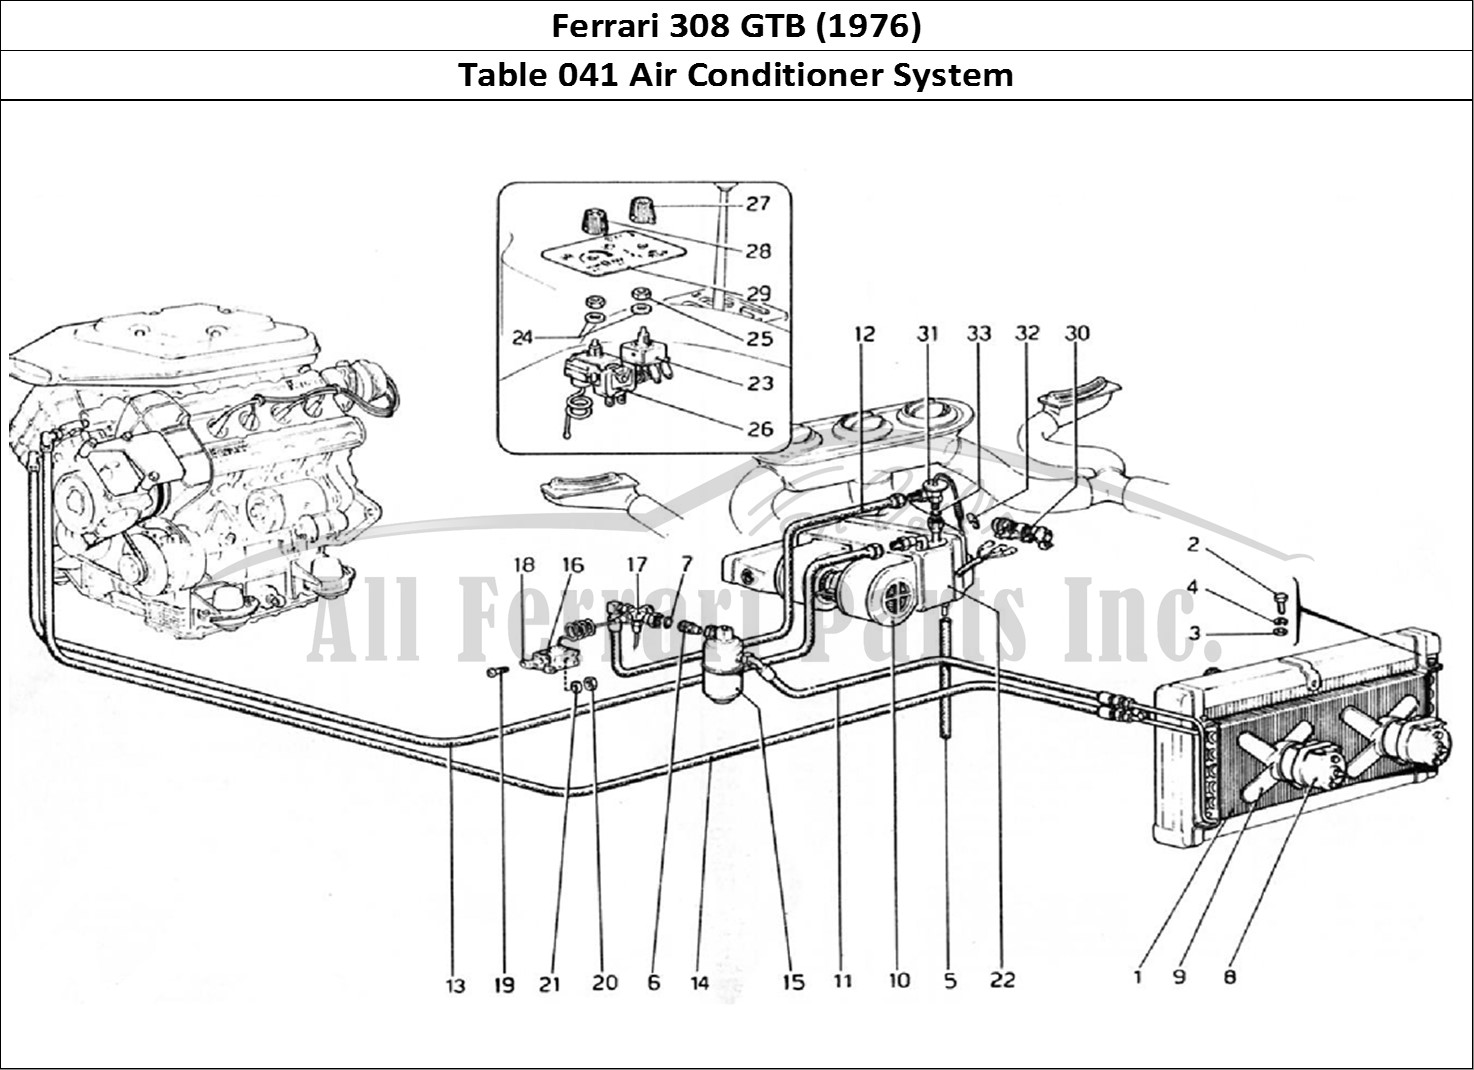 Ferrari Parts Ferrari 308 GTB (1976) Page 041 Air Conditioning System